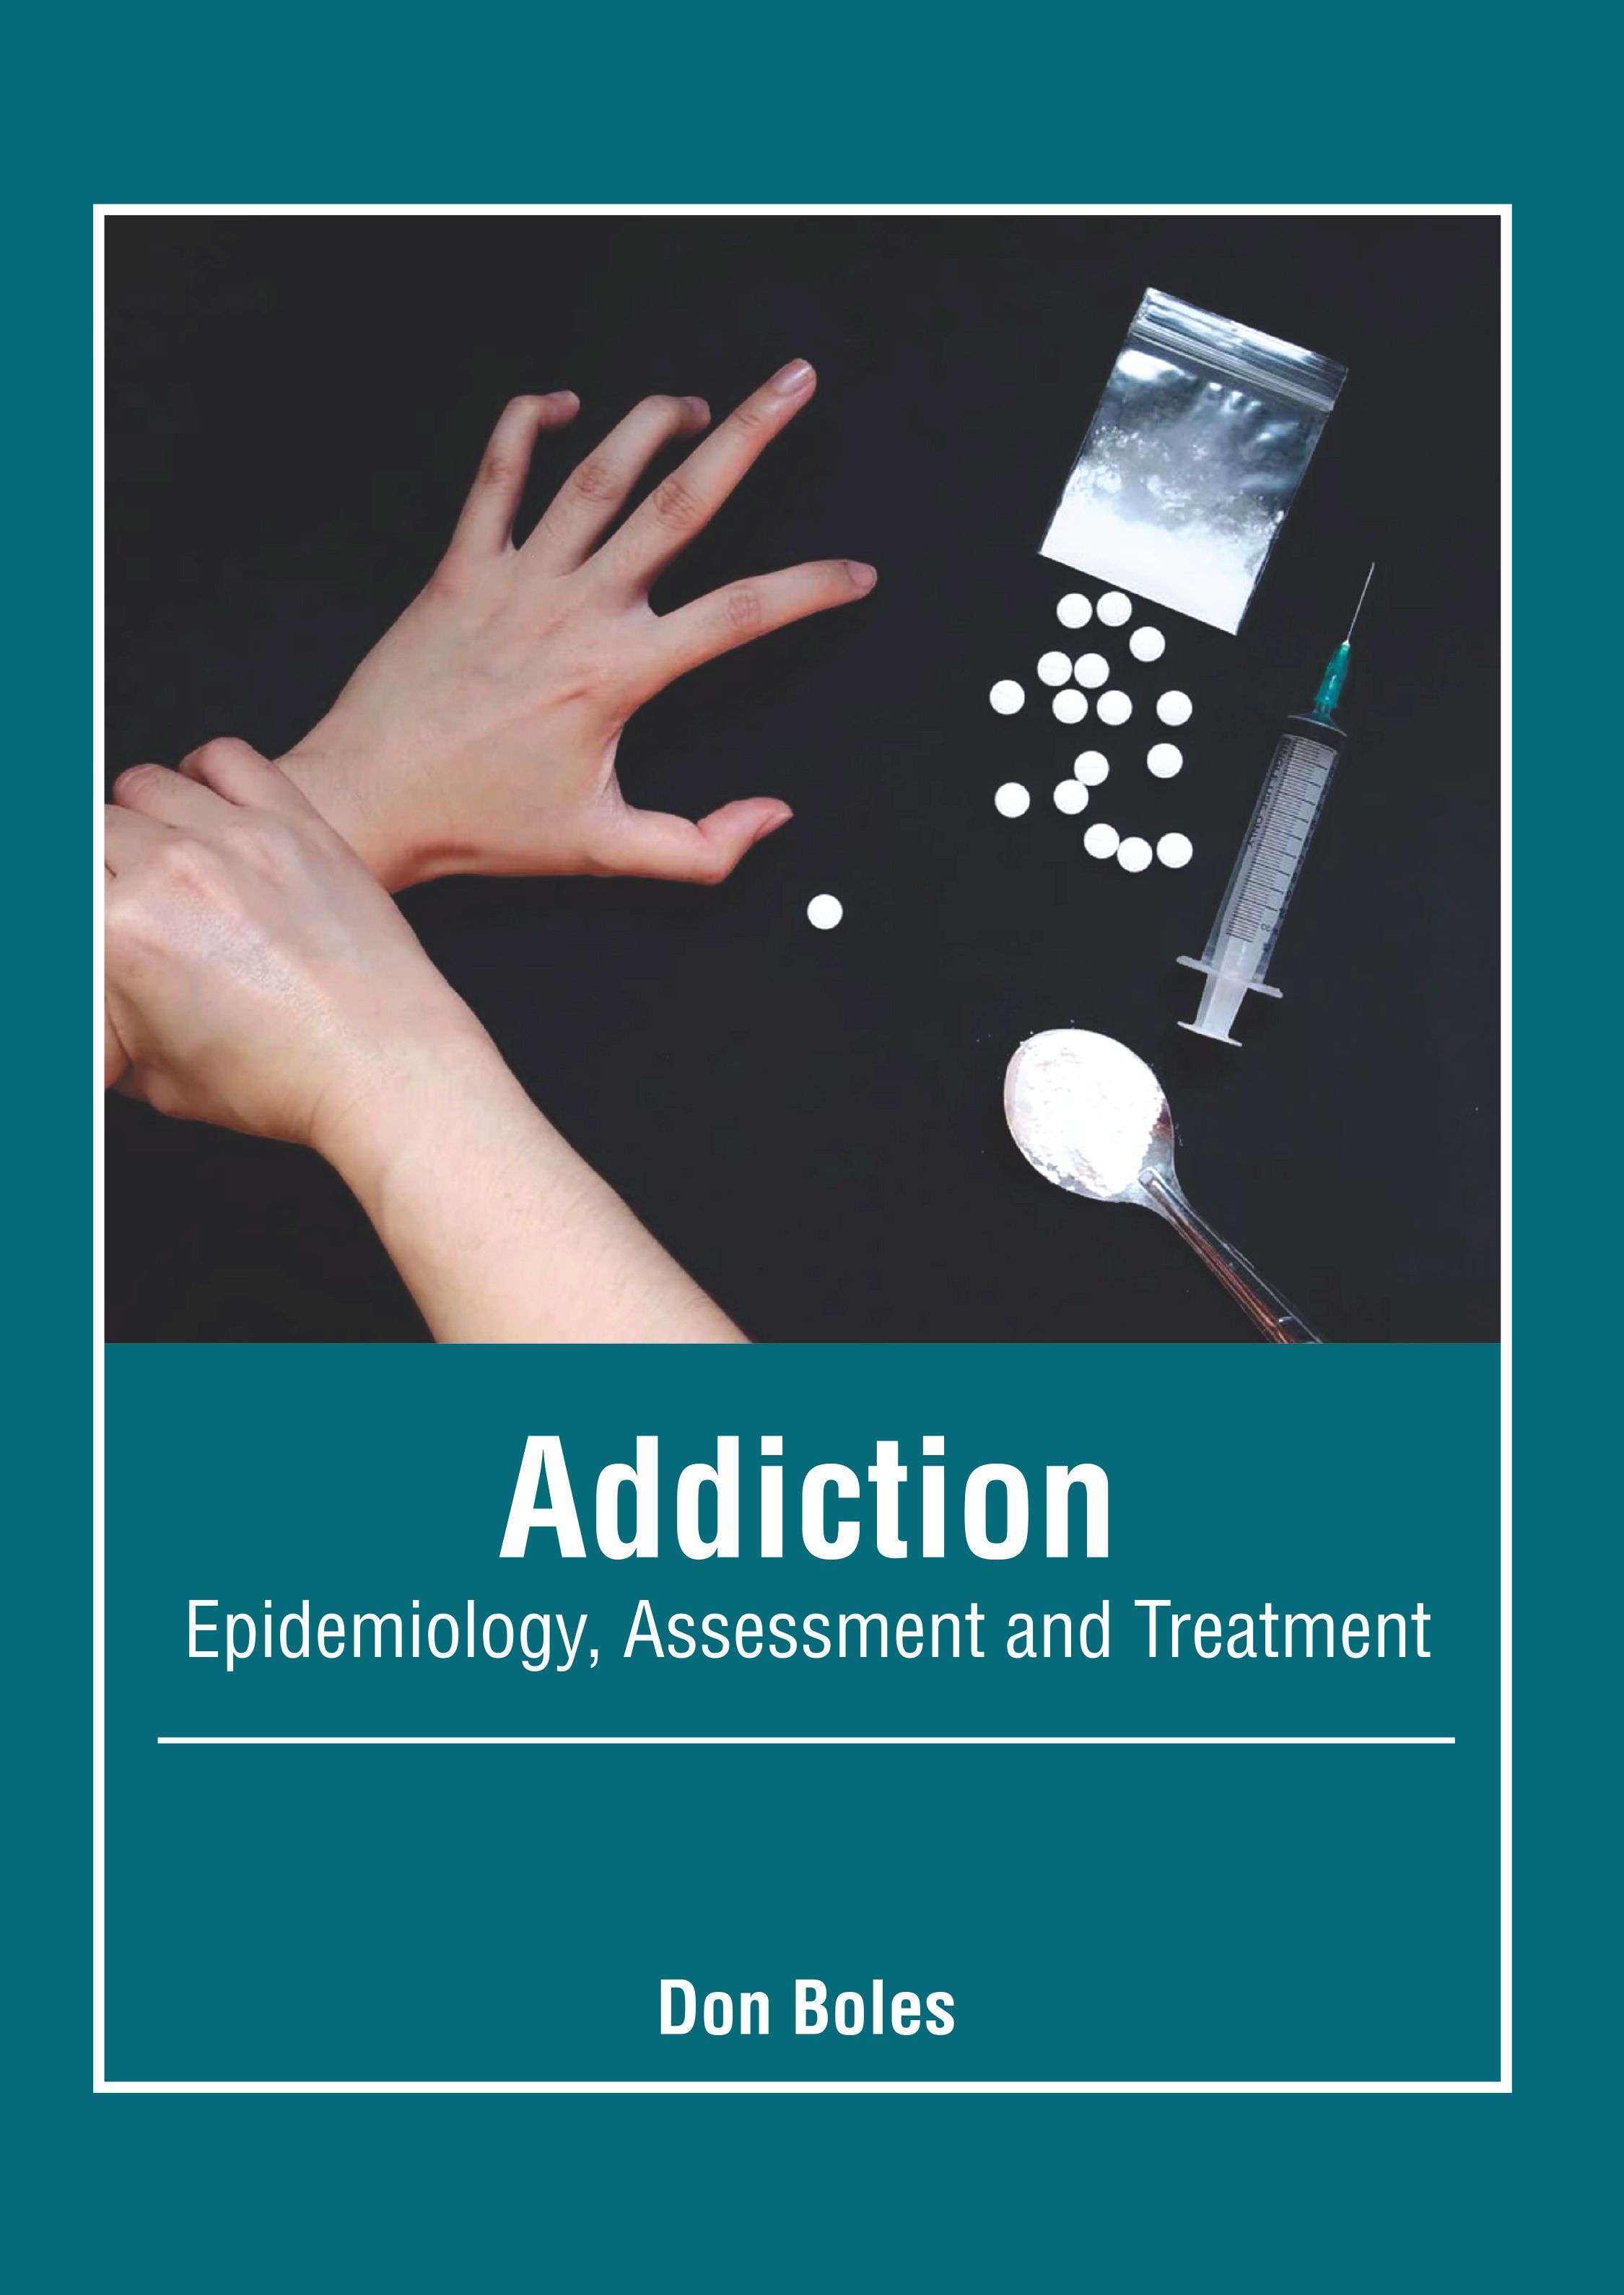 ADDICTION: EPIDEMIOLOGY, ASSESSMENT AND TREATMENT